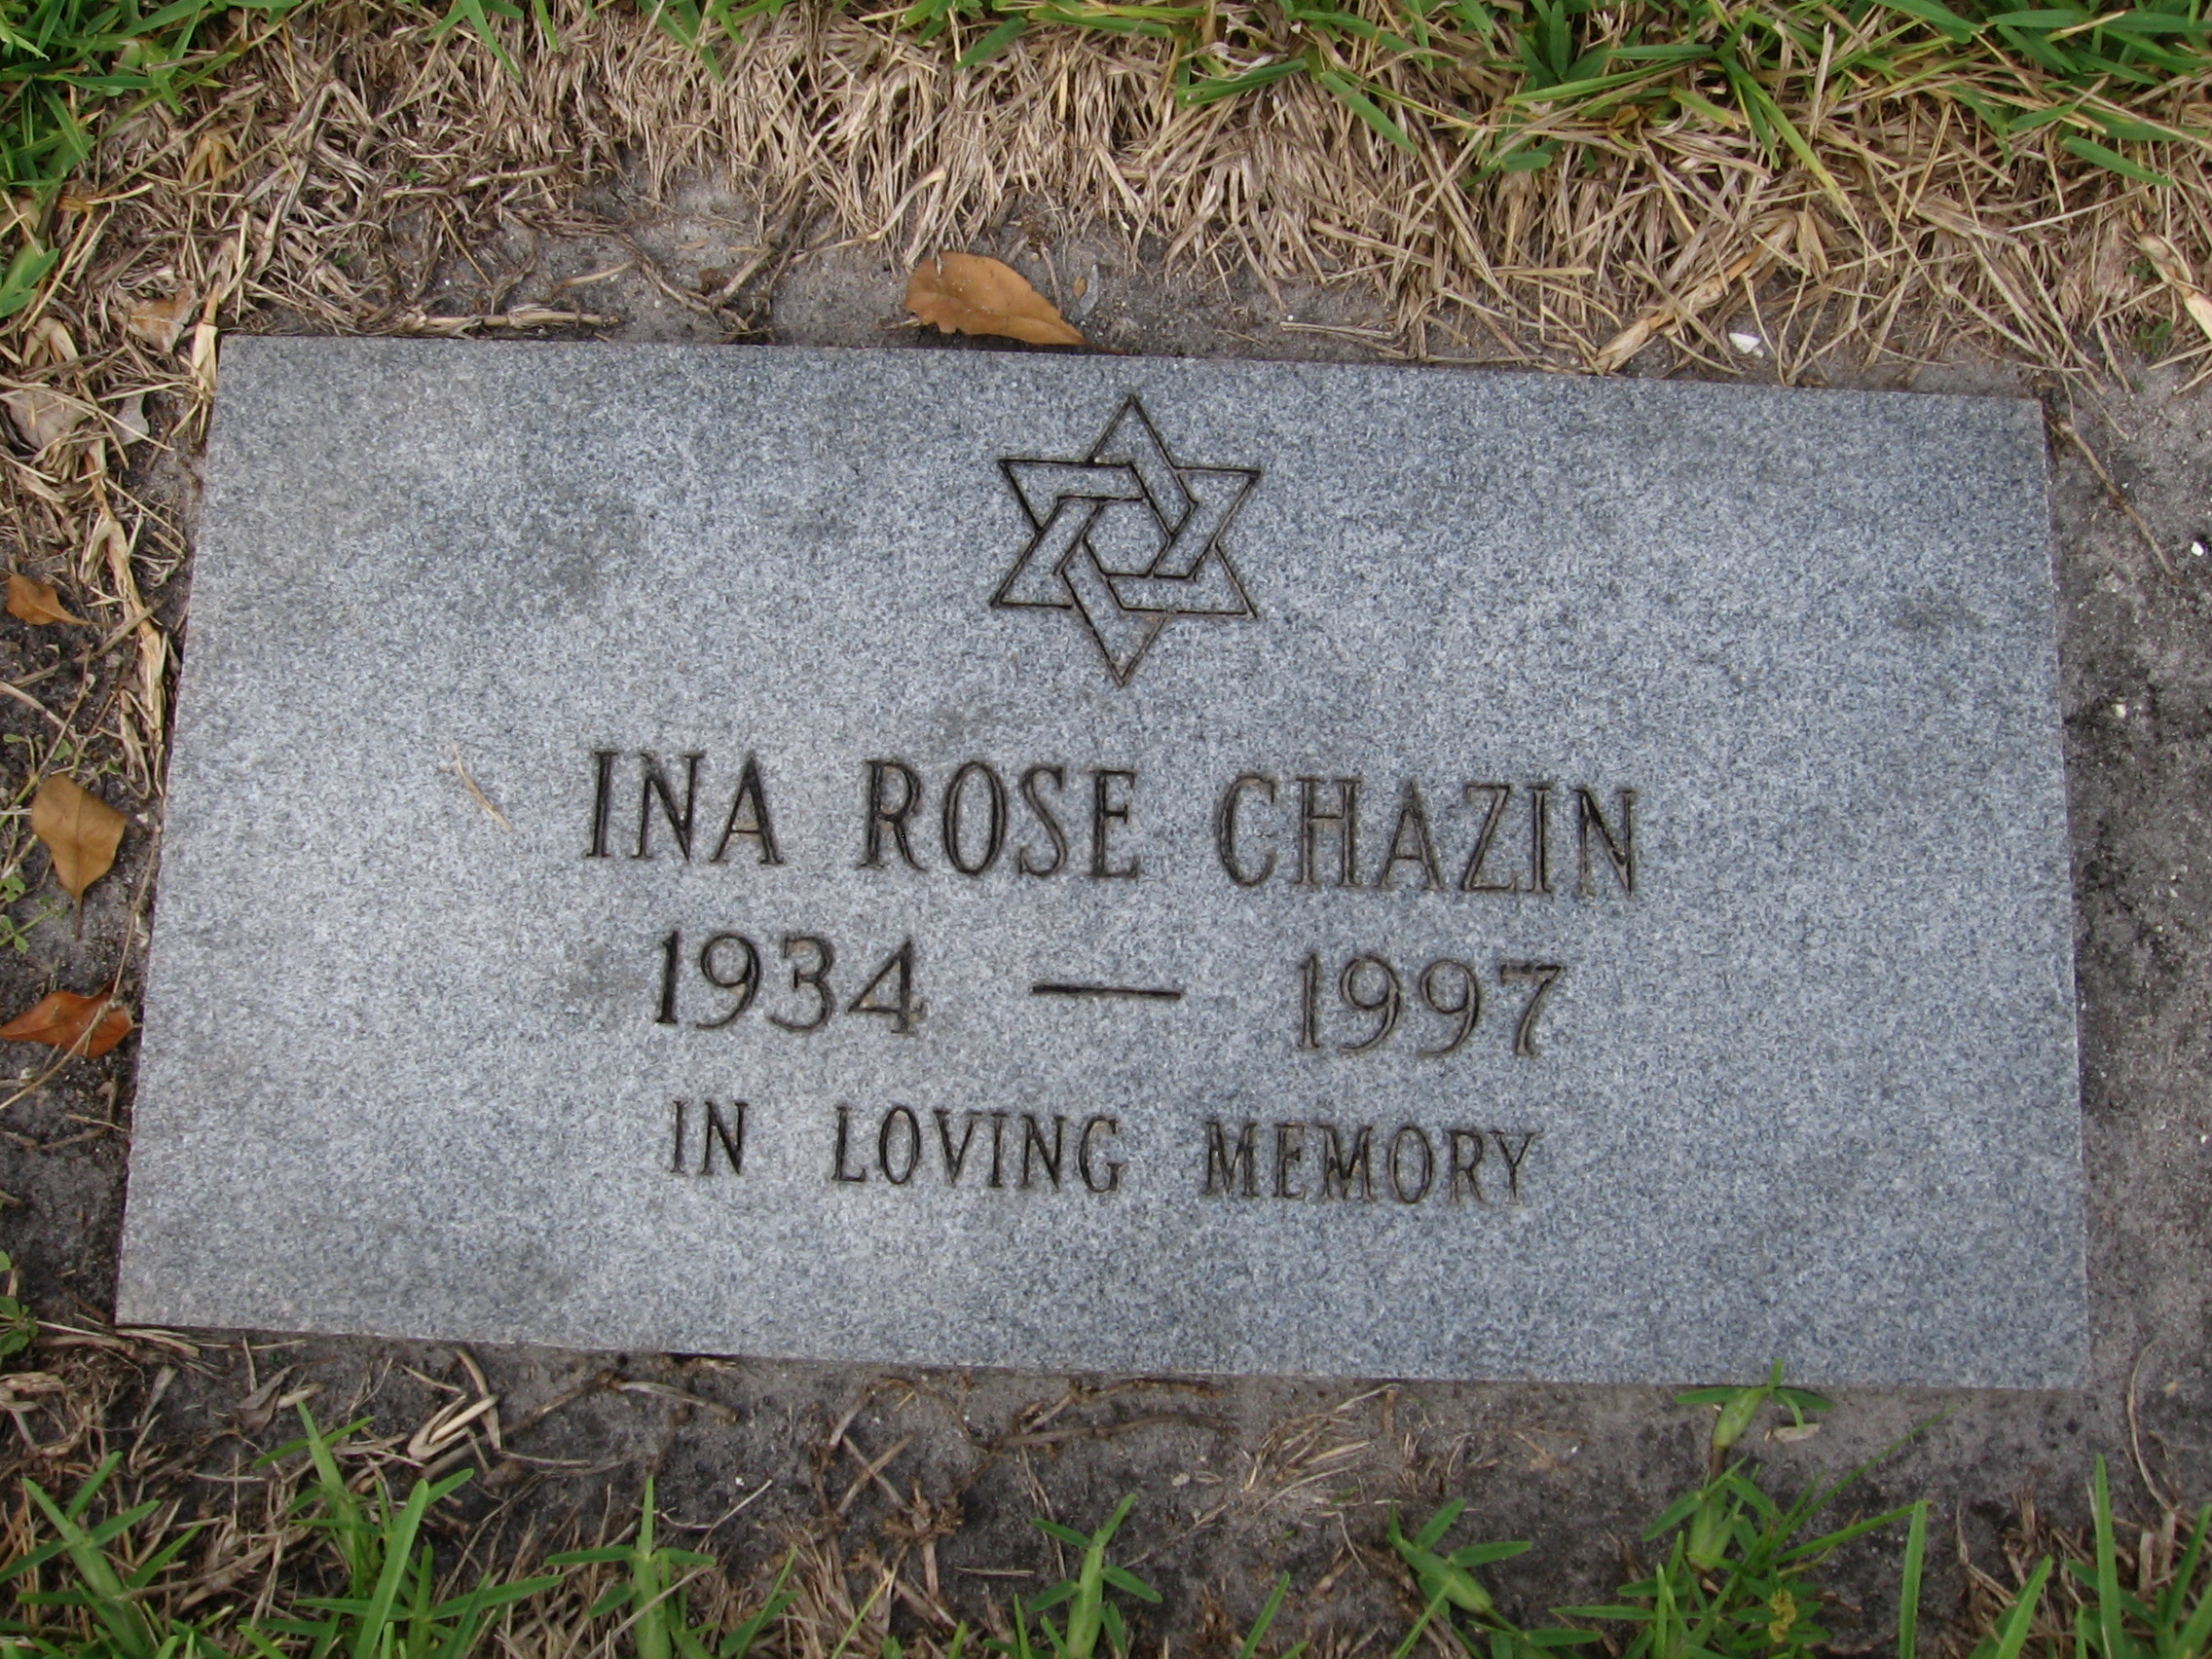 Ina Rose Chazin